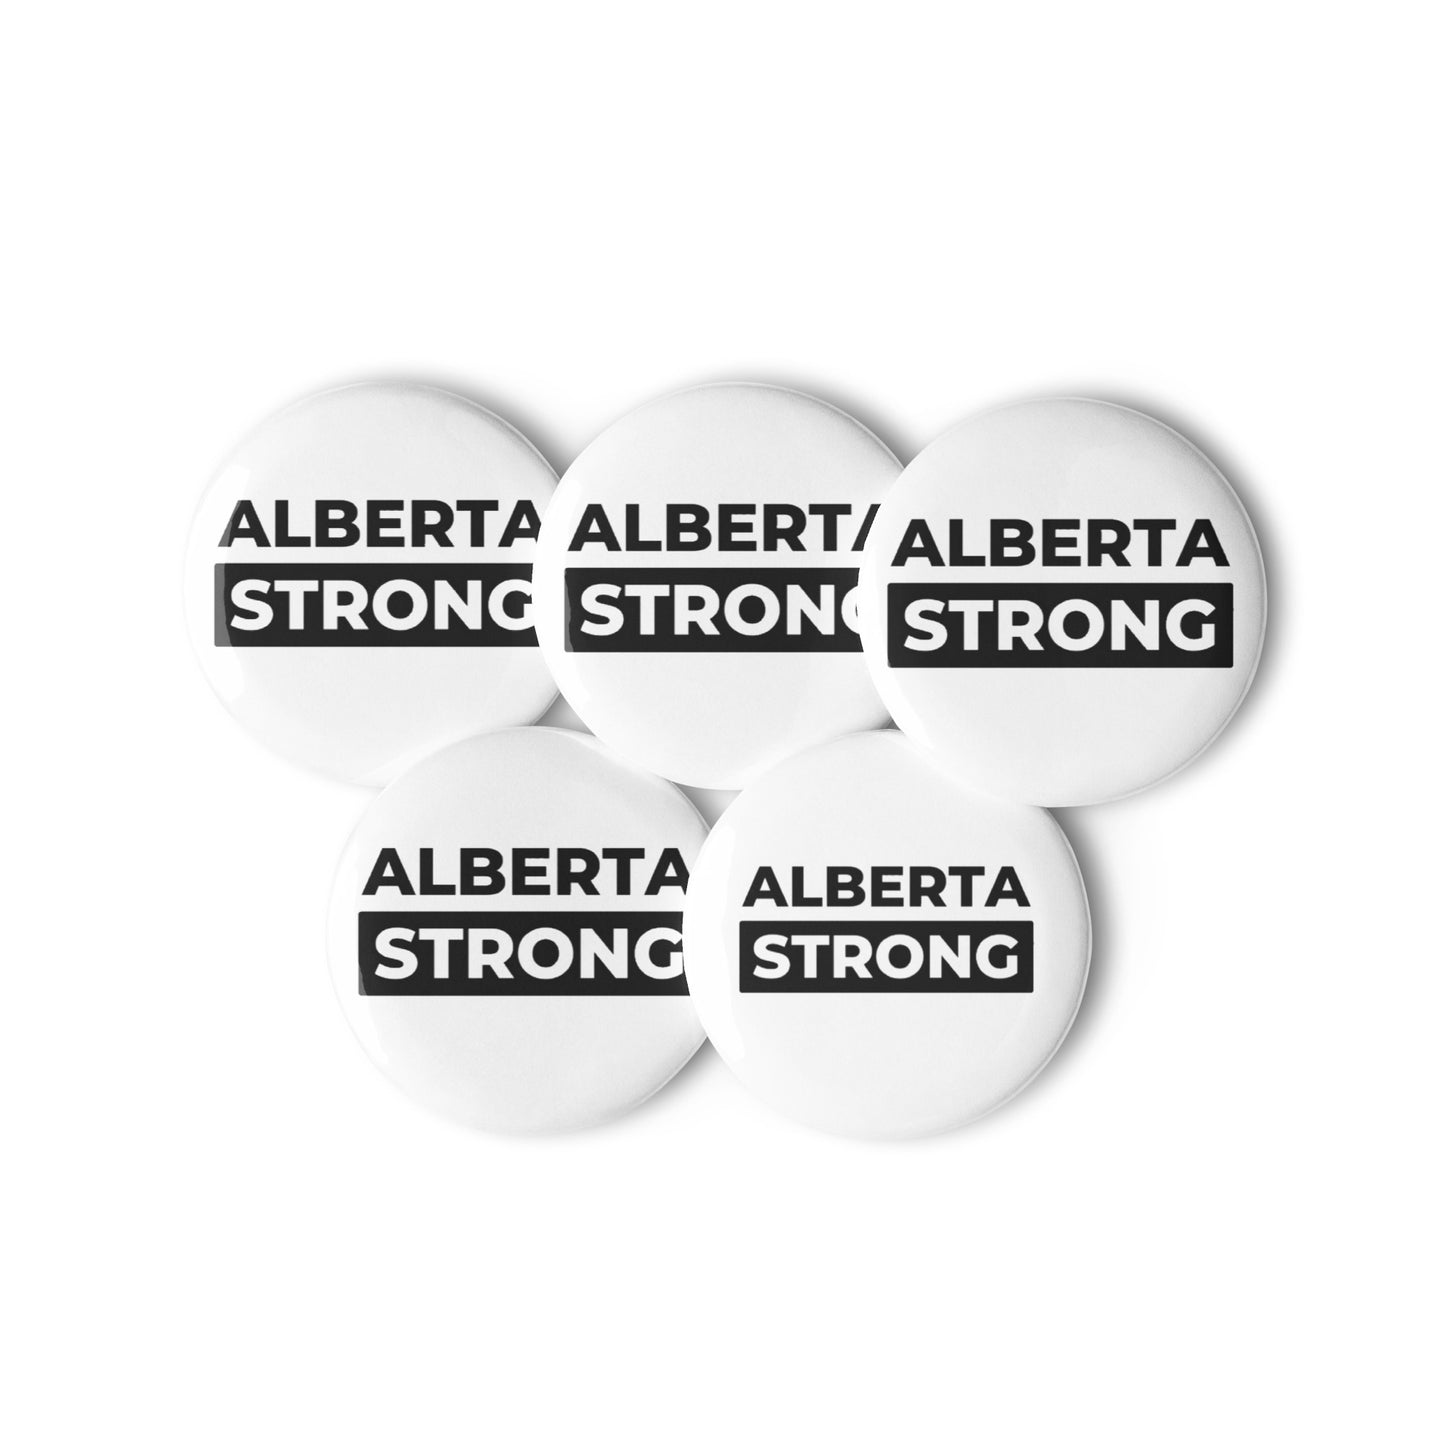 Keep Alberta Free - Set of pin buttons